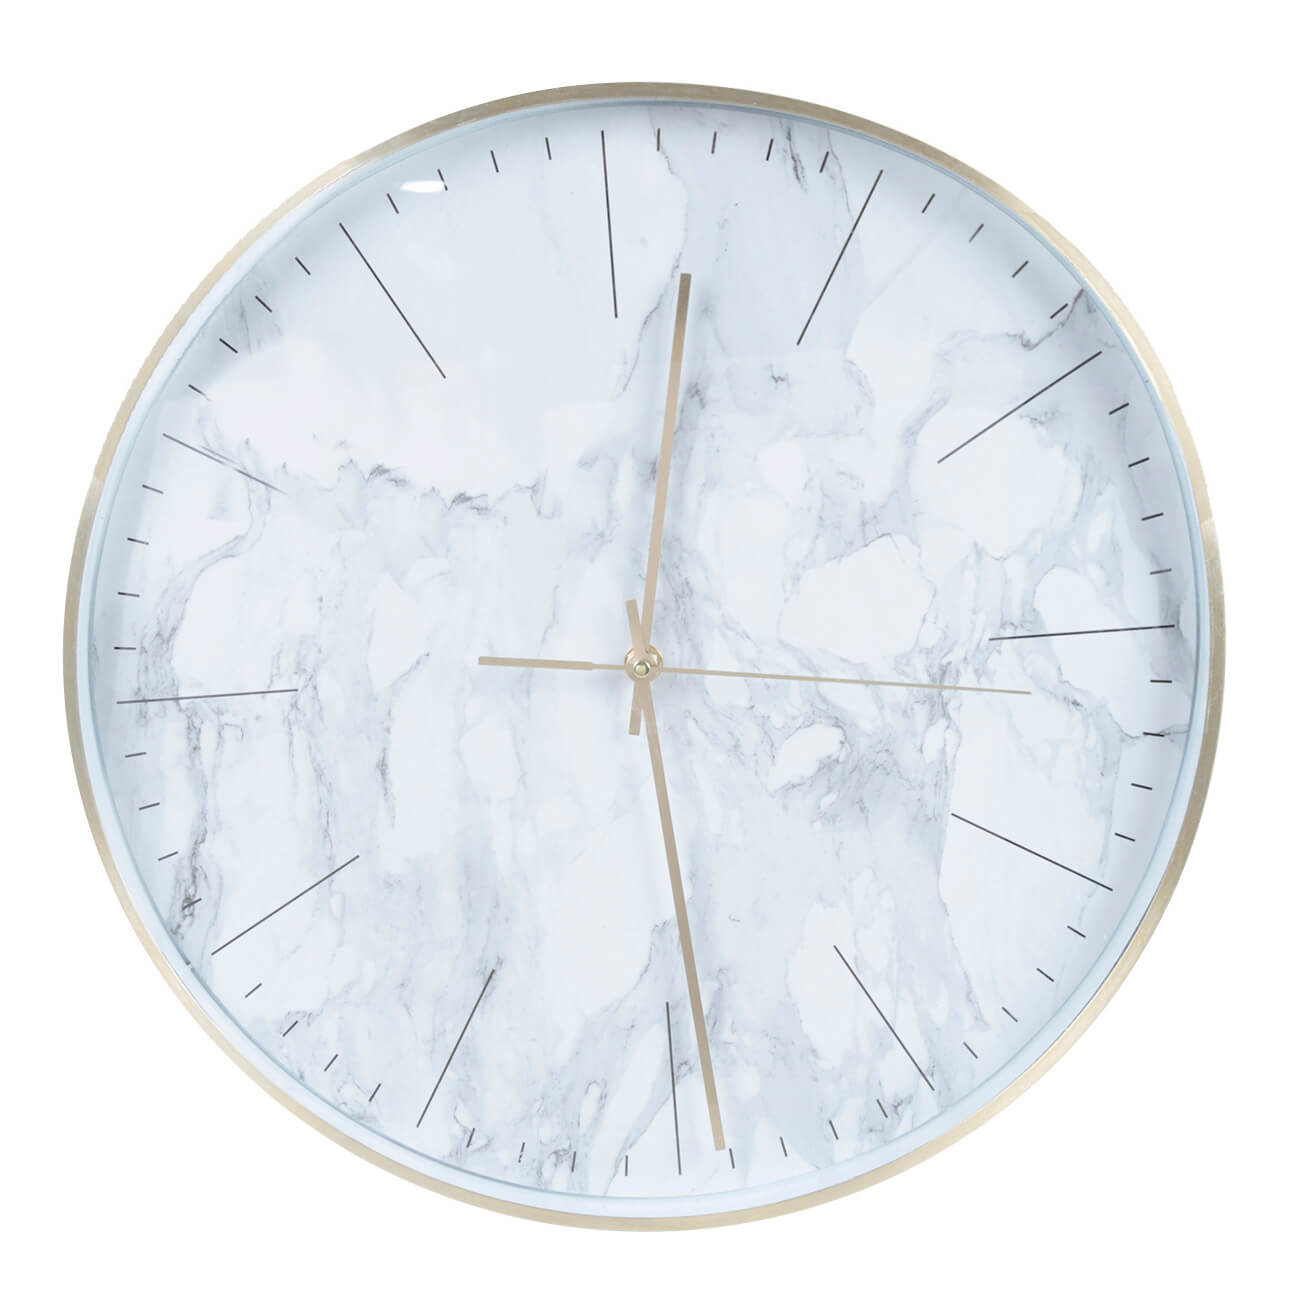 Часы настенные, 40 см, пластик/стекло, круглые, белые, Мрамор, Maniera r watanabe copper clock часы настенные